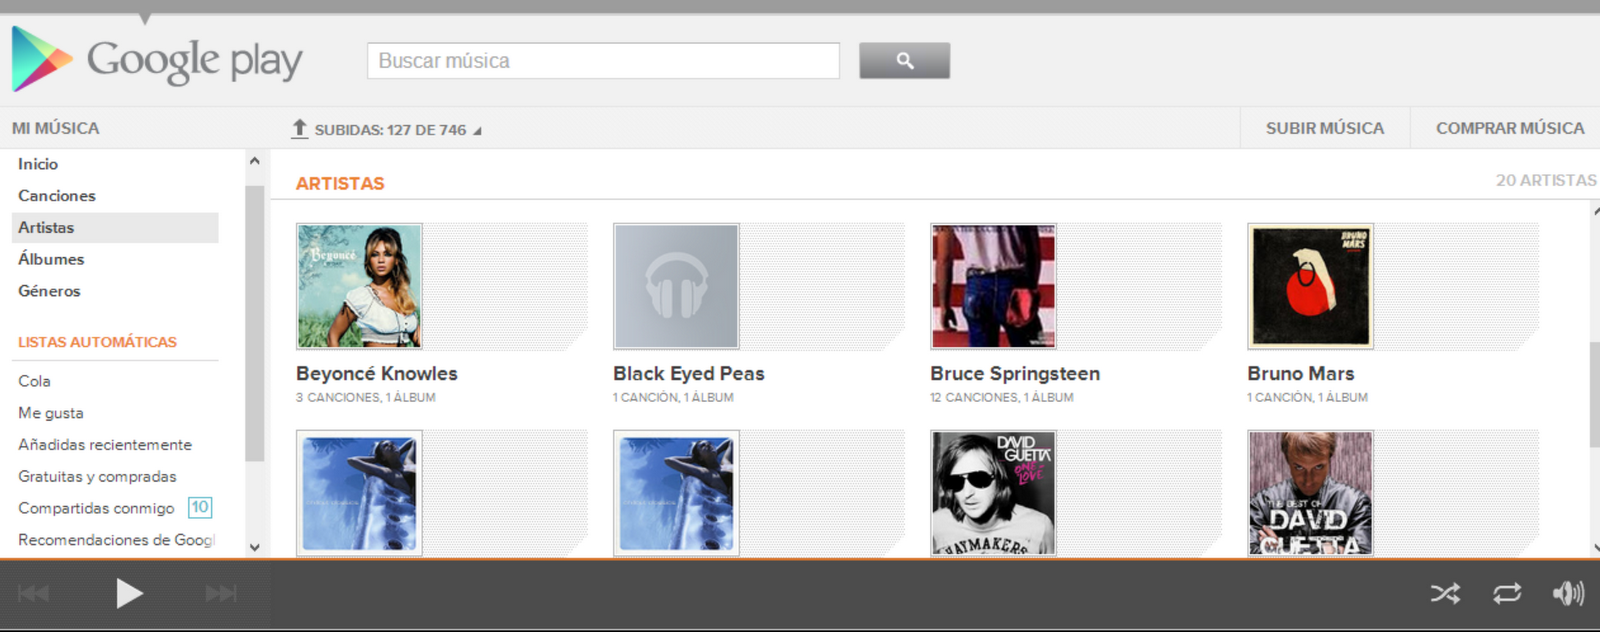 Me gusta y mucho Google Play Music